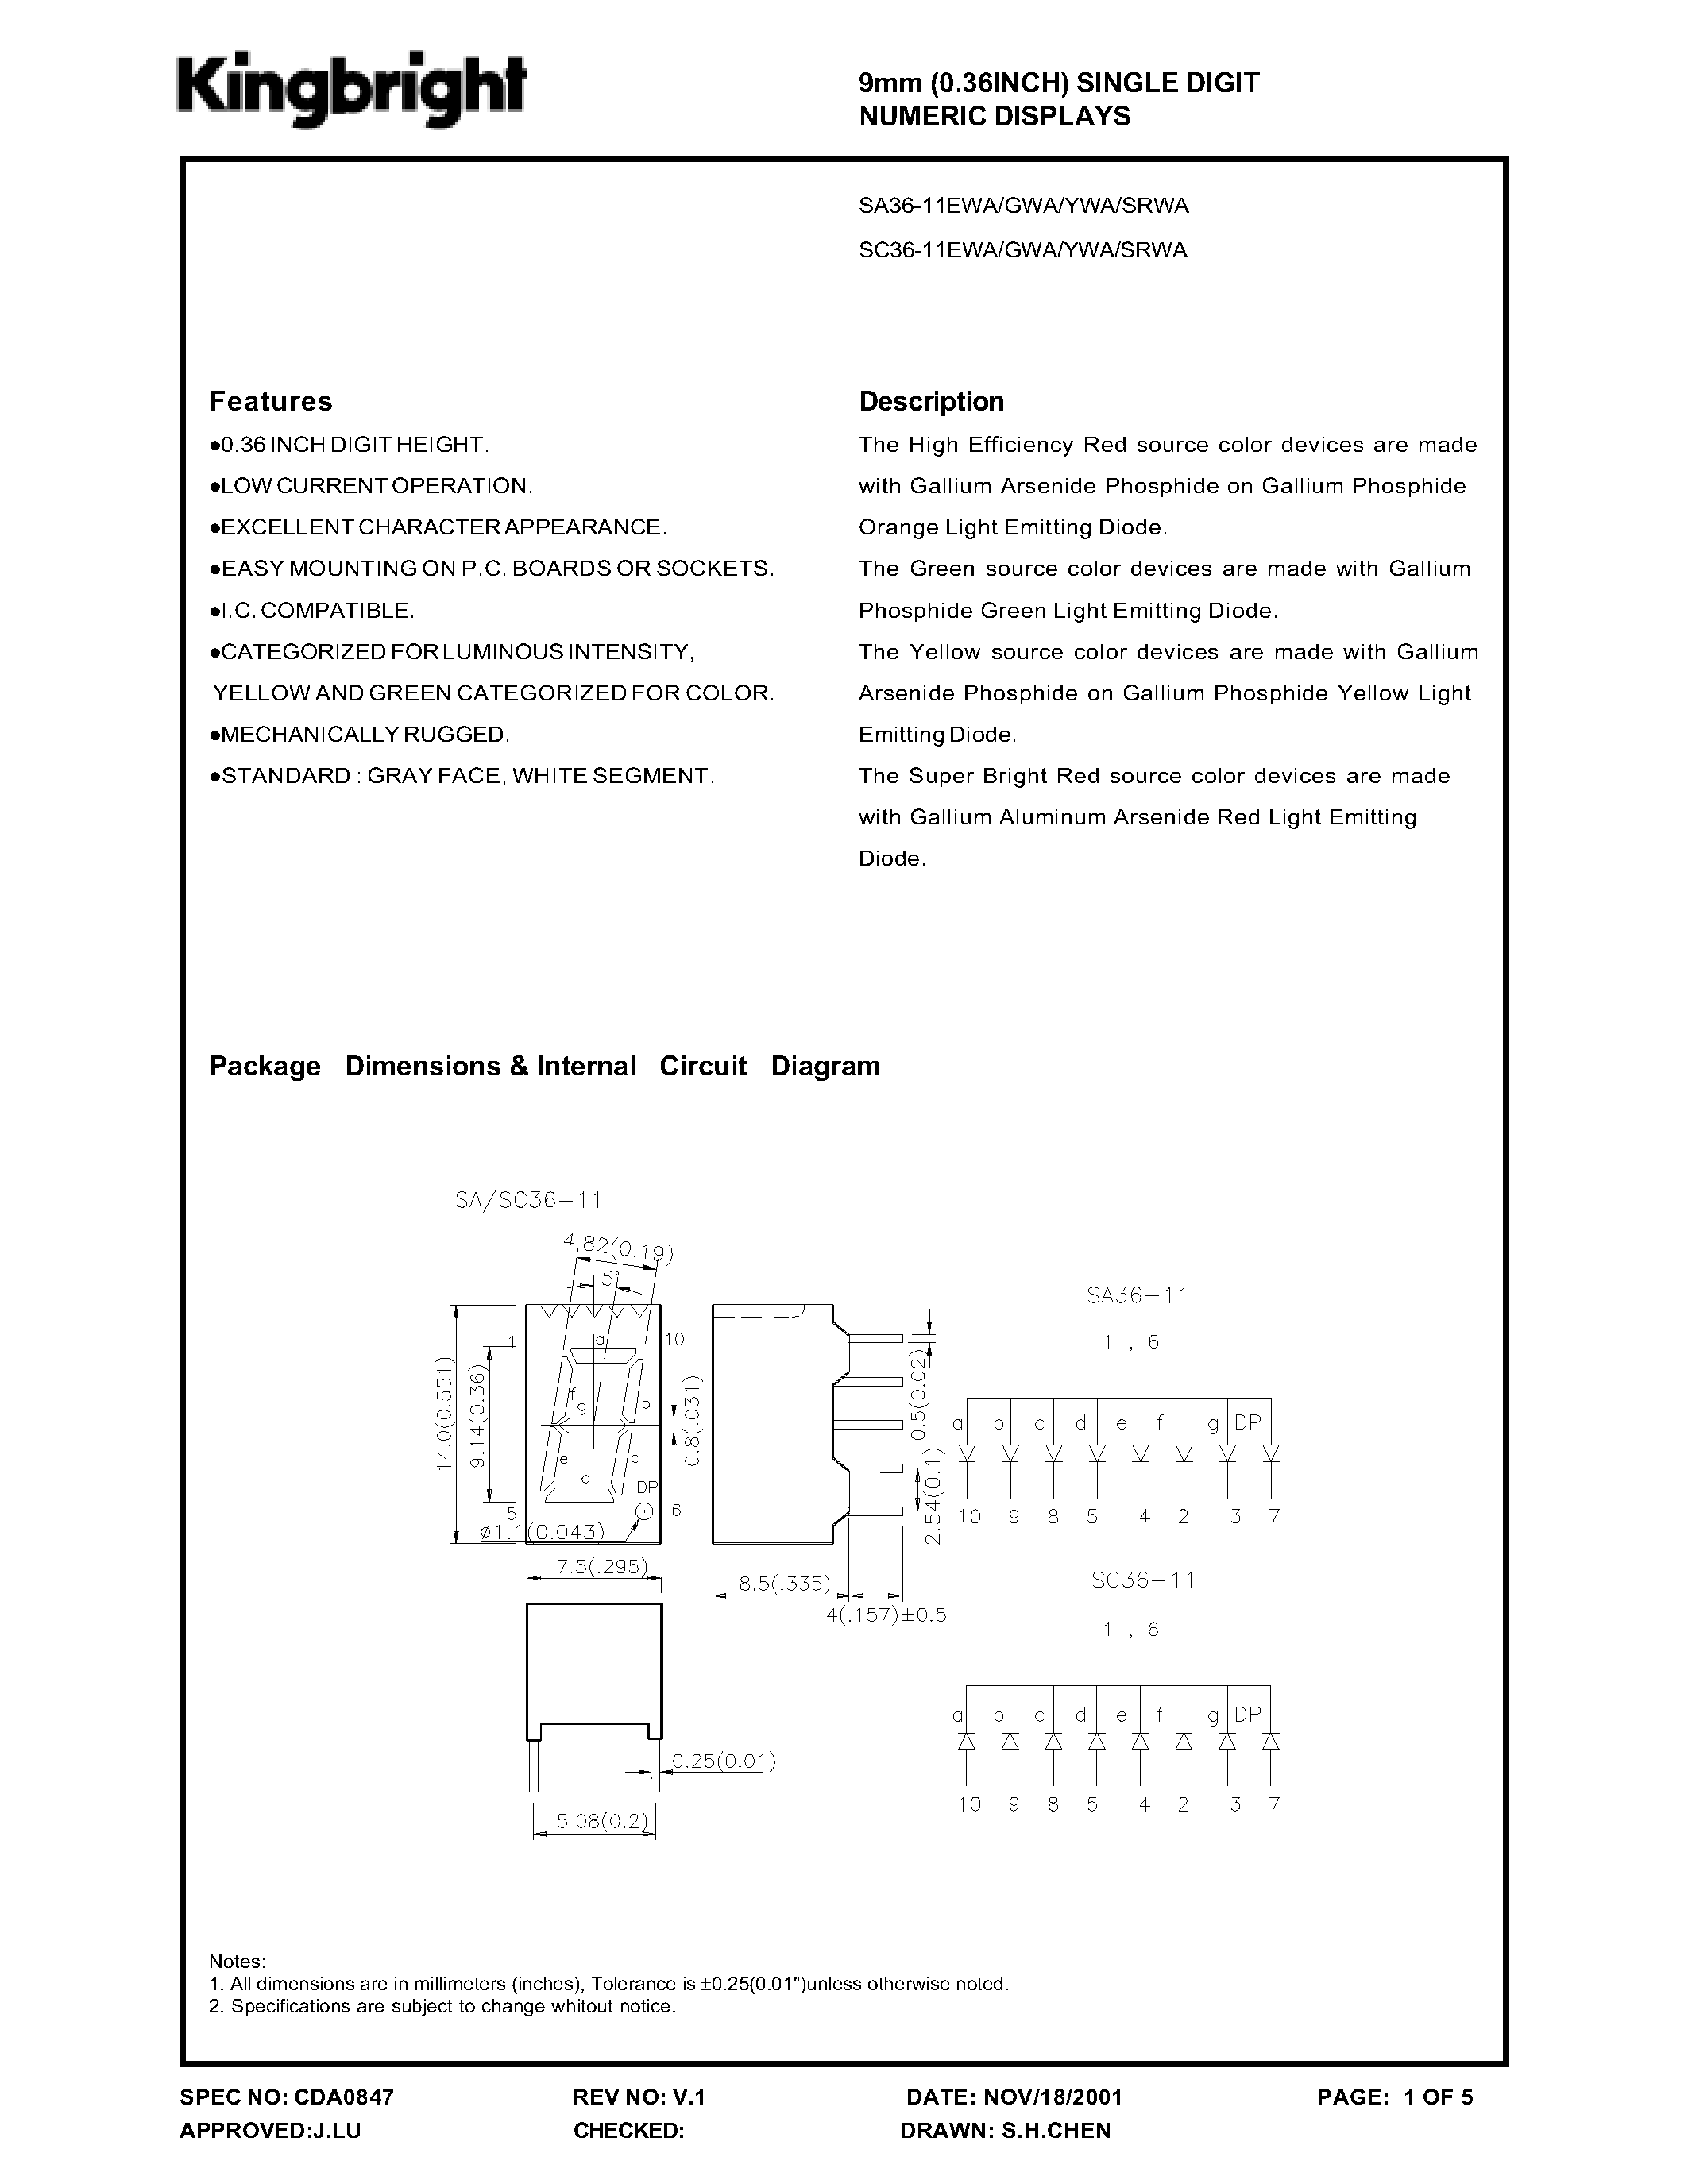 Datasheet SA36-11SRWA - 9mm(0.36INCH) SINGLE DIGIT NUMERIC DISPLAYS page 1